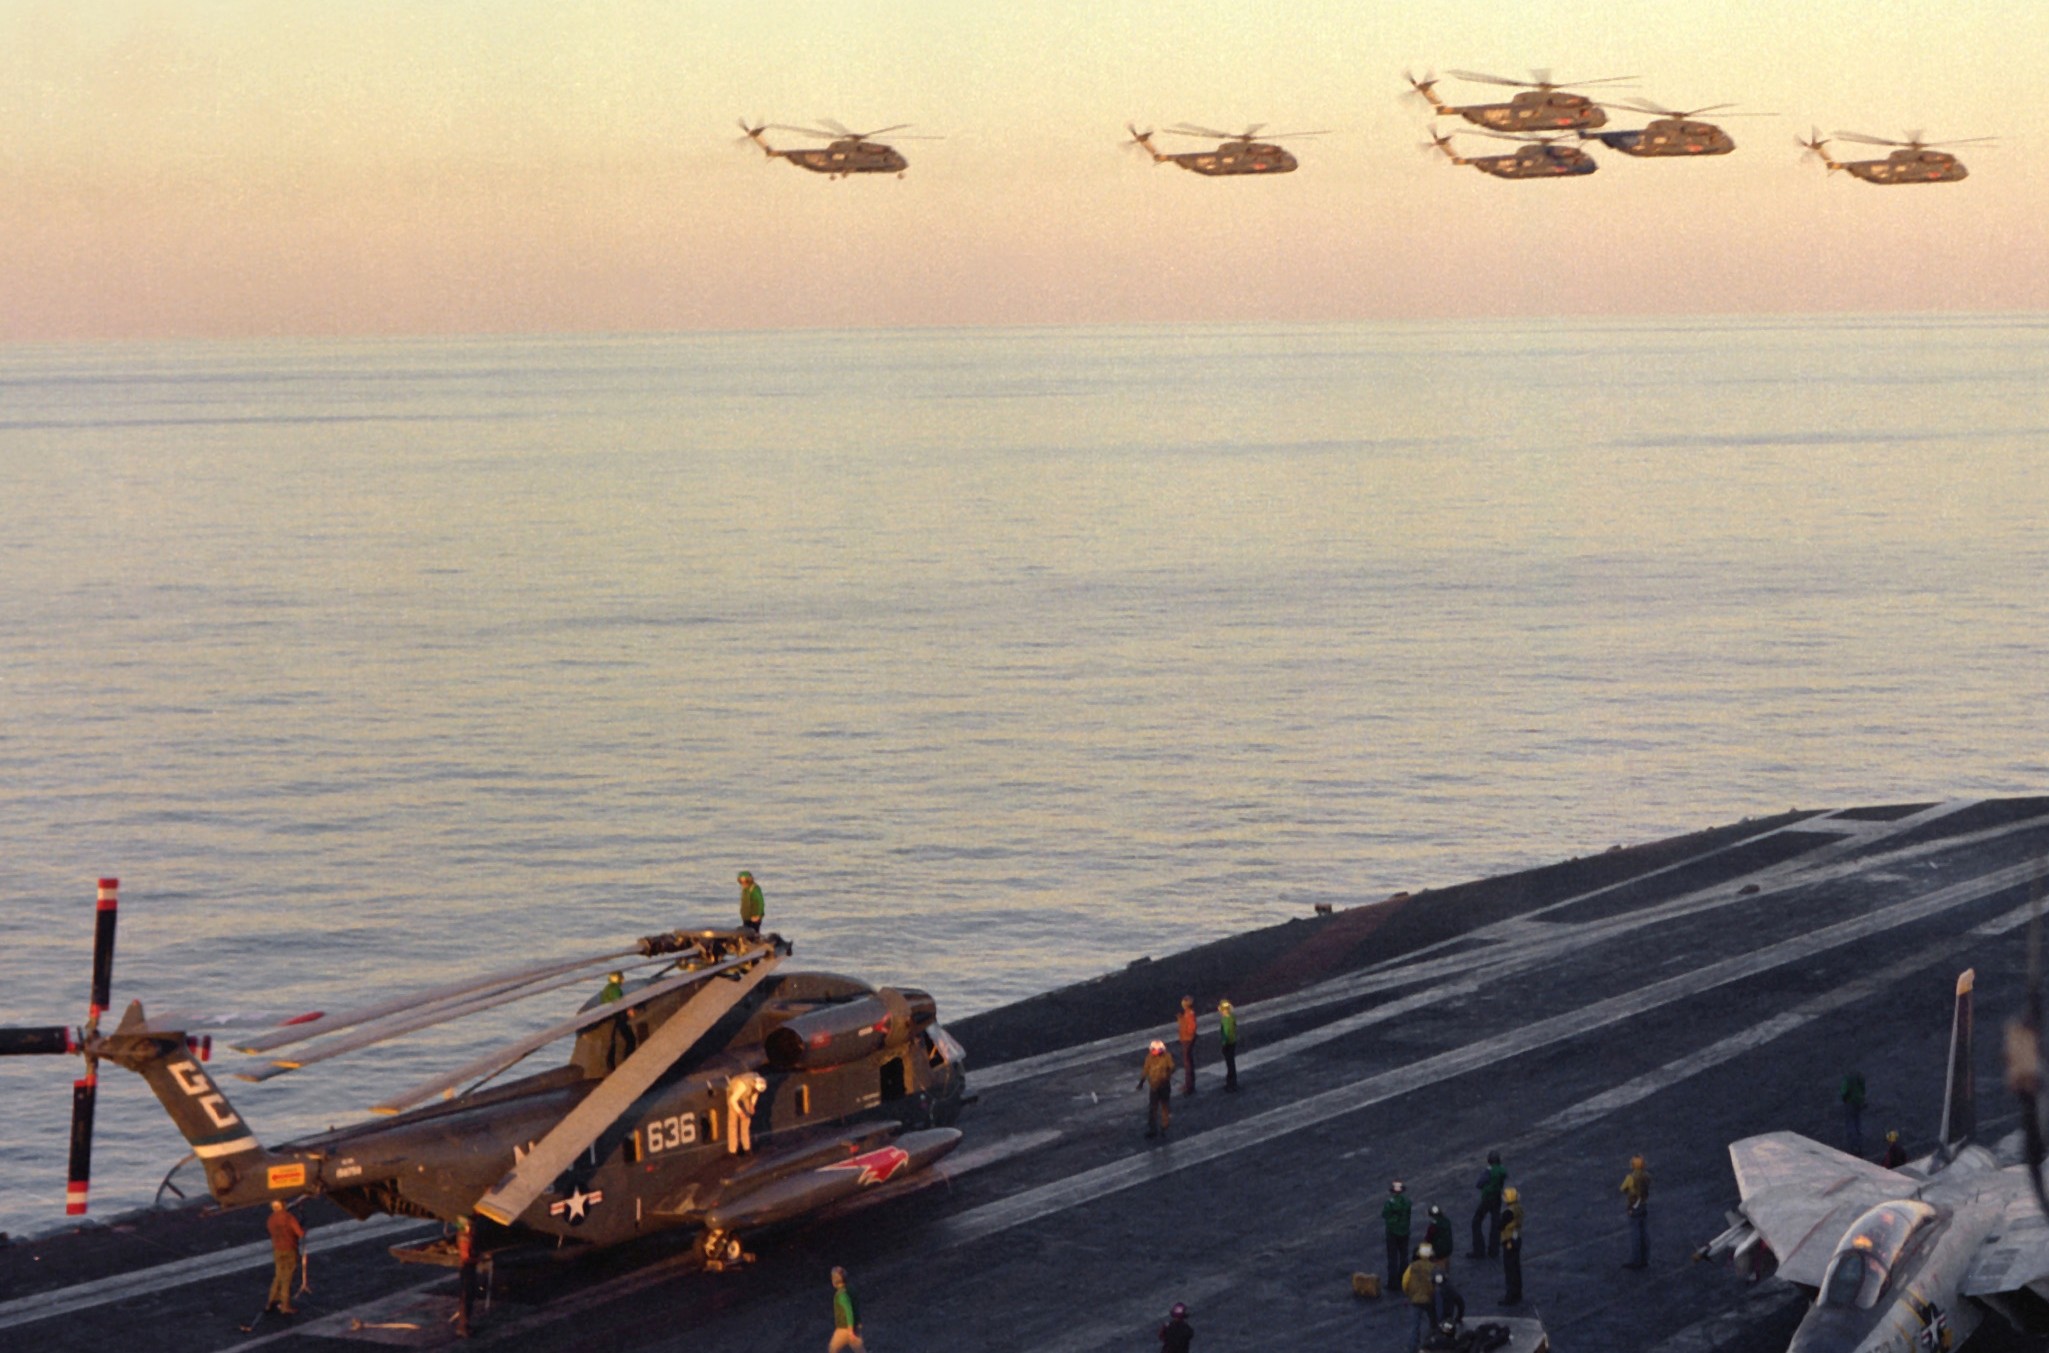 hm-16 seahawks helicopter mine countermeasures squadron navy rh-53d sea stallion 03 operation evening light eagle claw 1980 uss nimitz cvn-68 iran